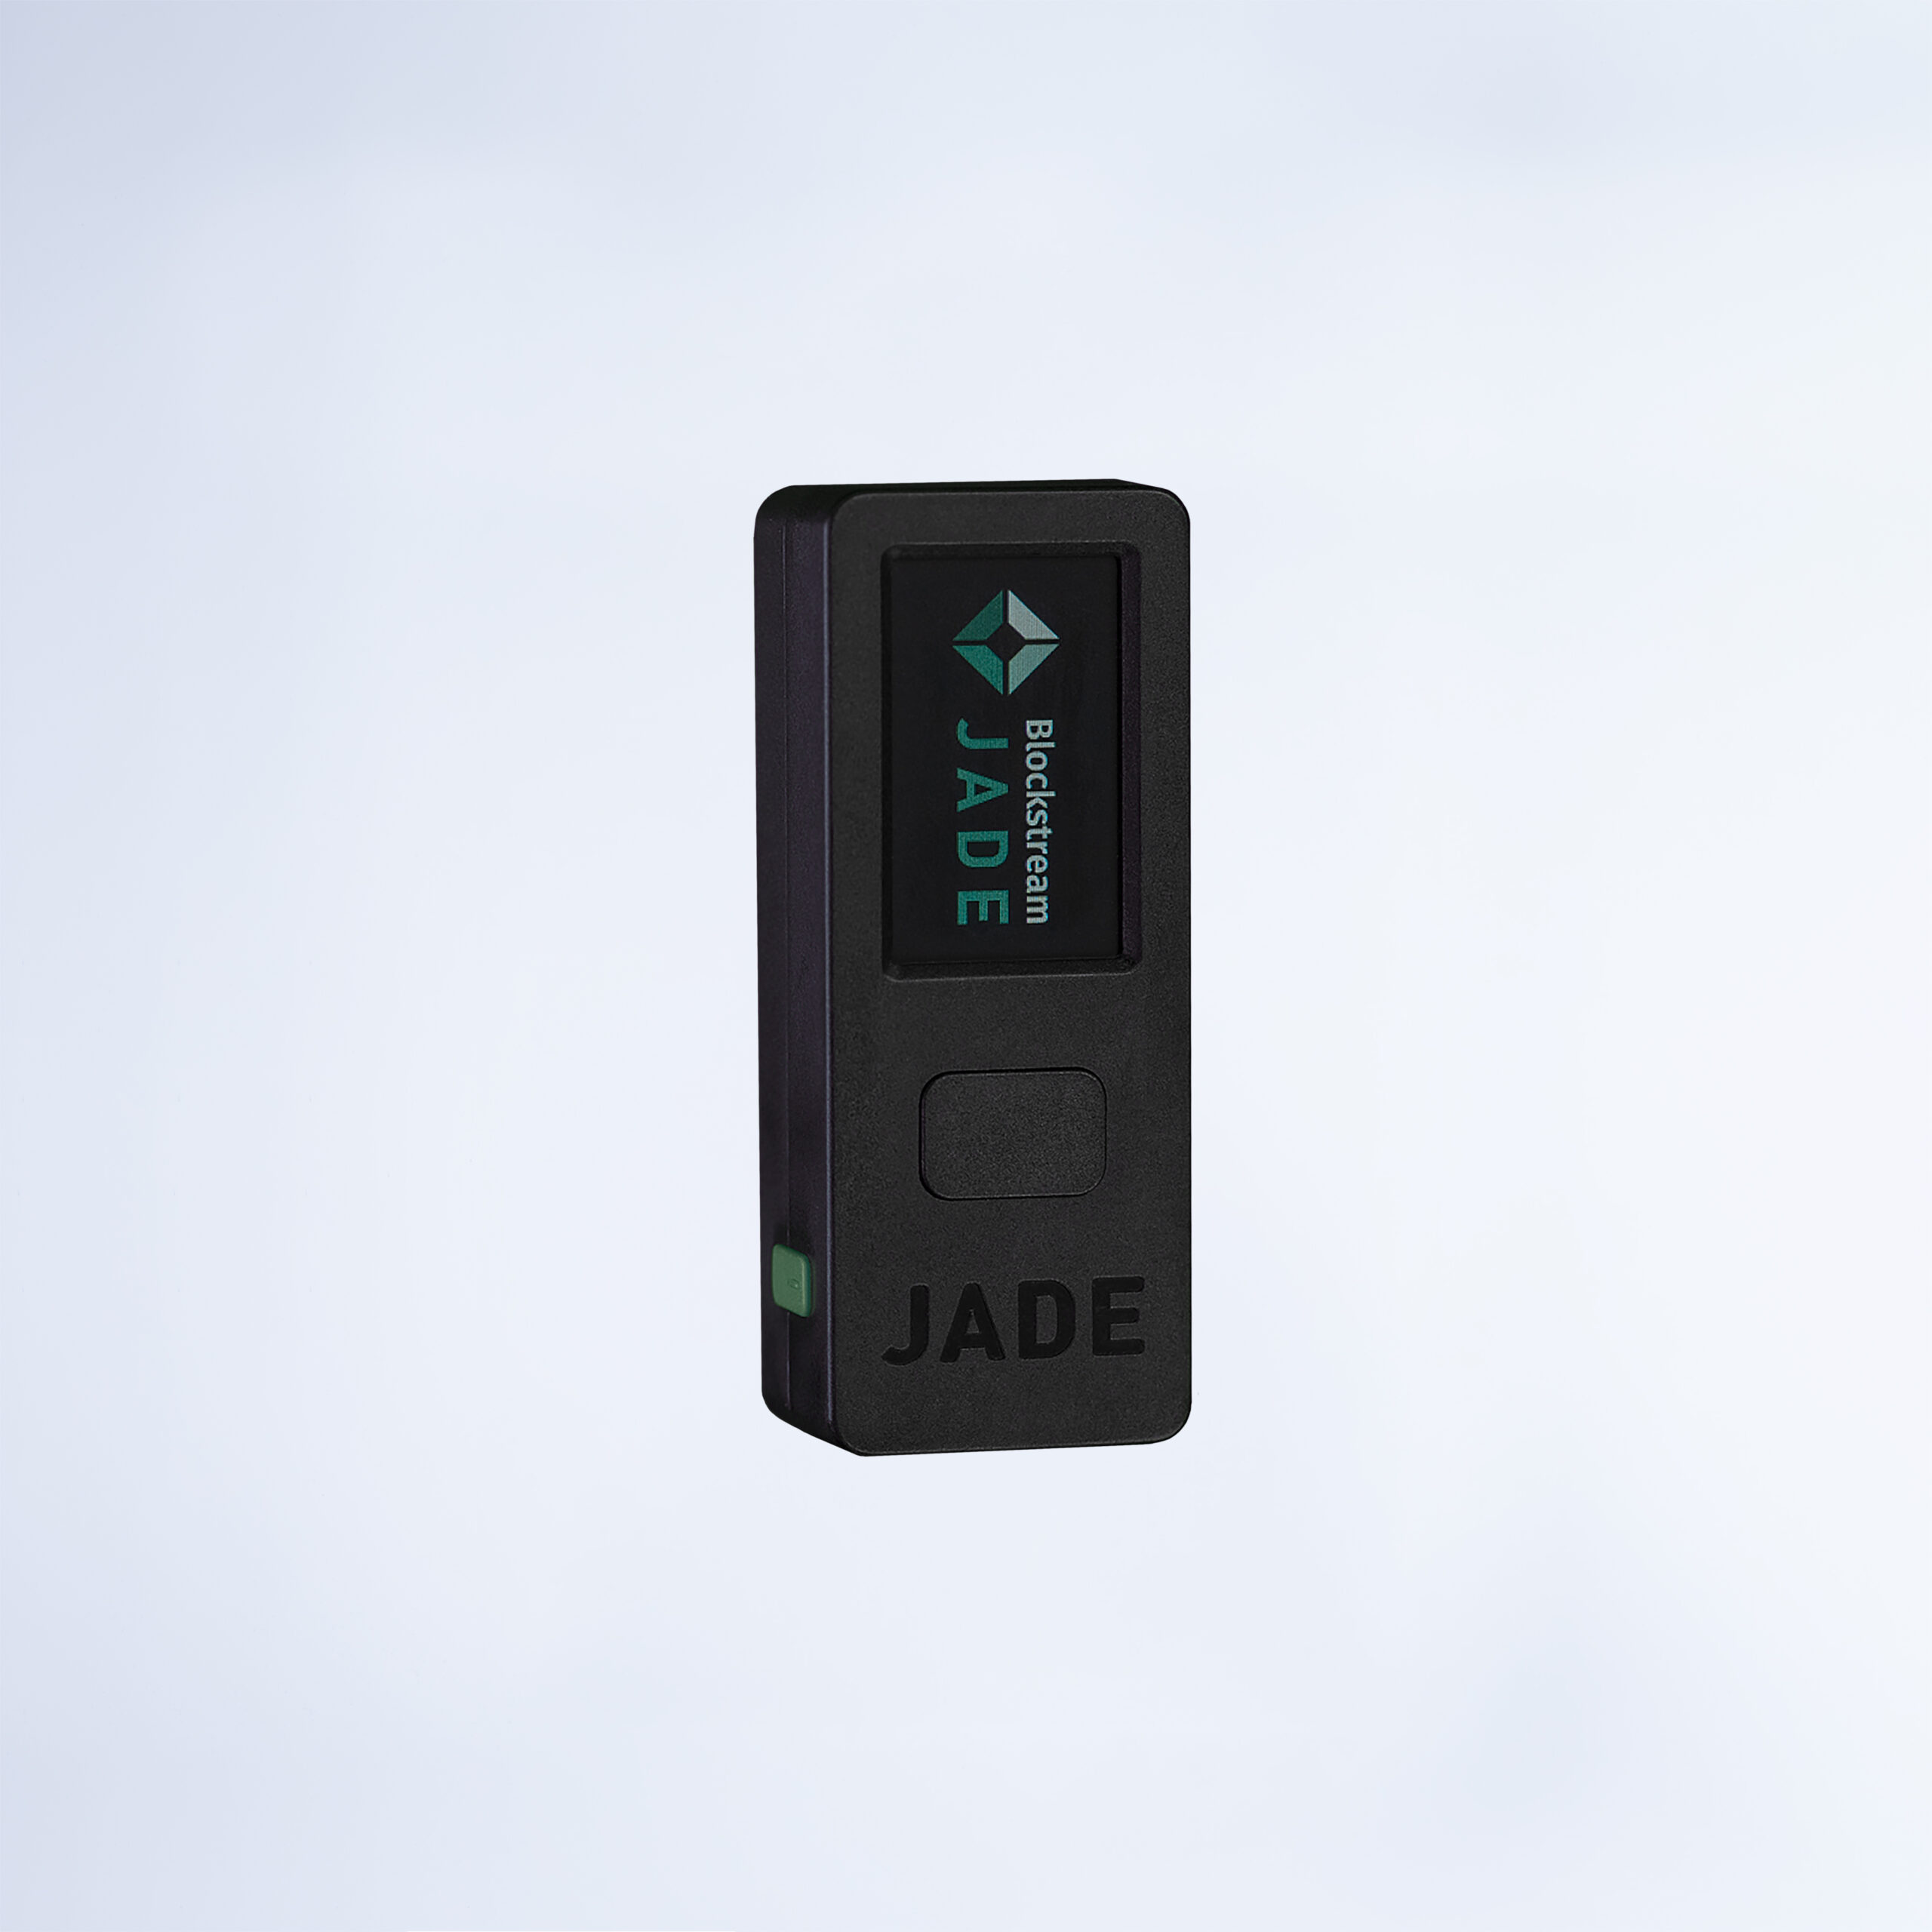 Blockstream Jade & Metal Bundle